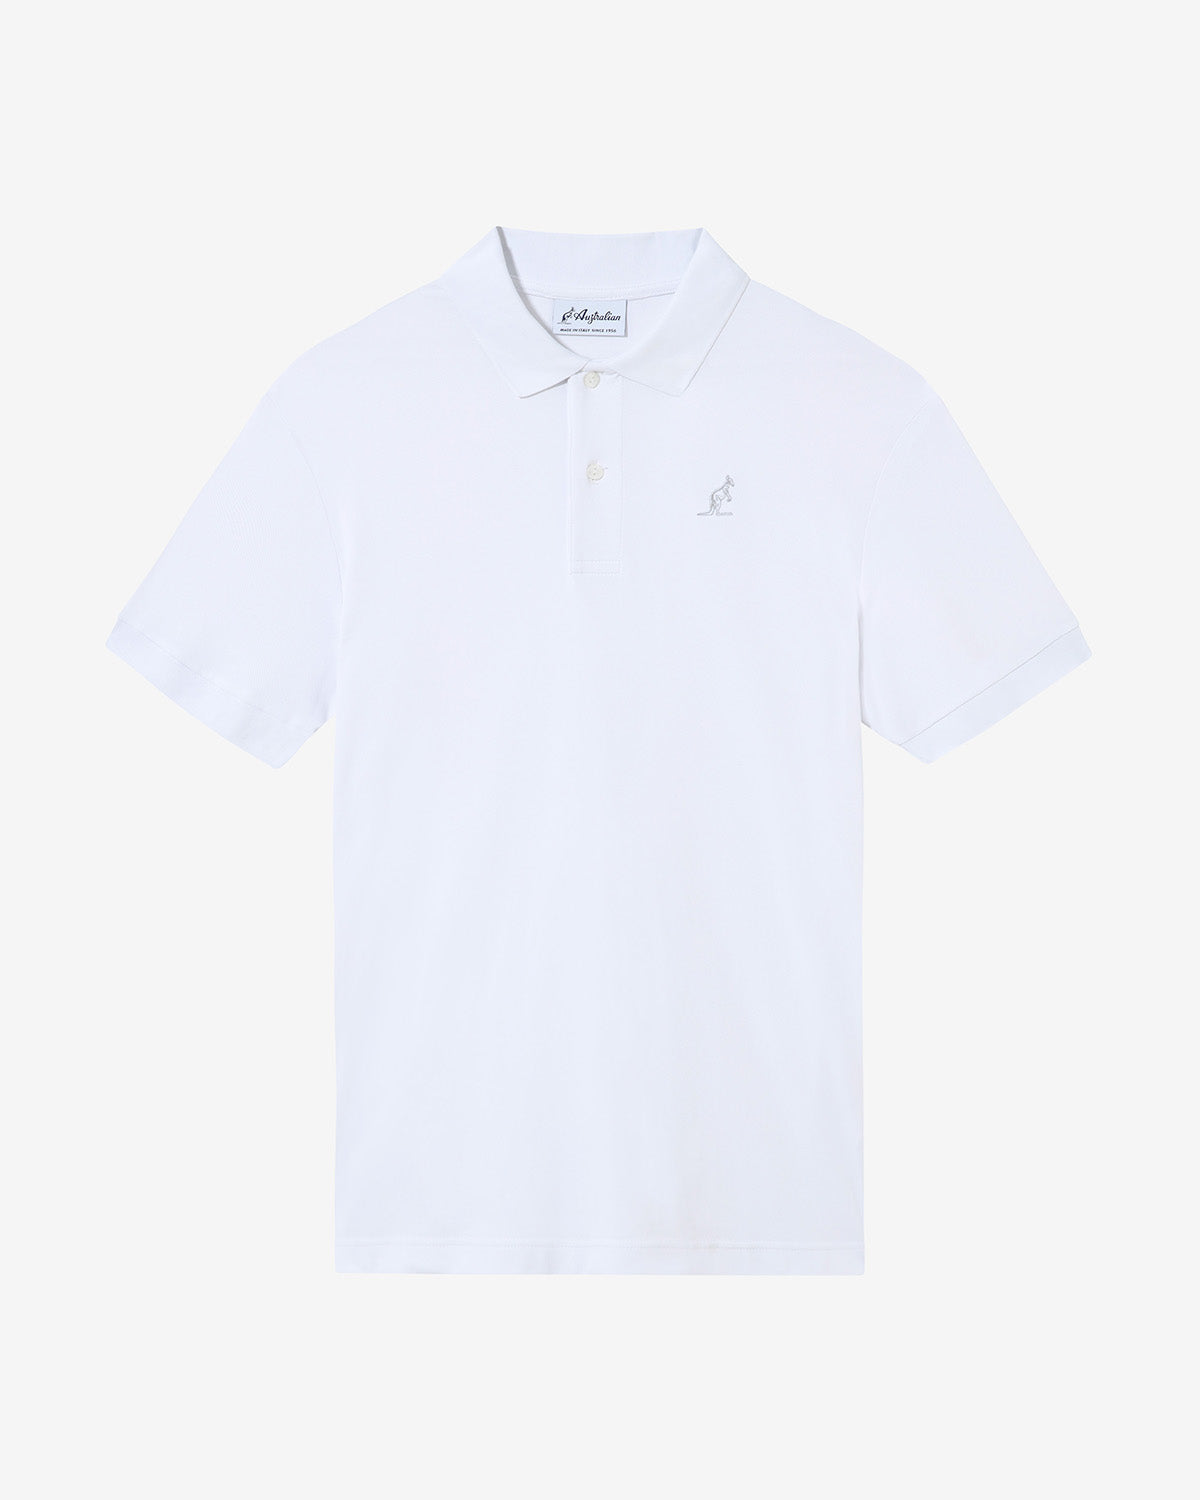 Basic Pique Polo Shirt: Australian Sportswear